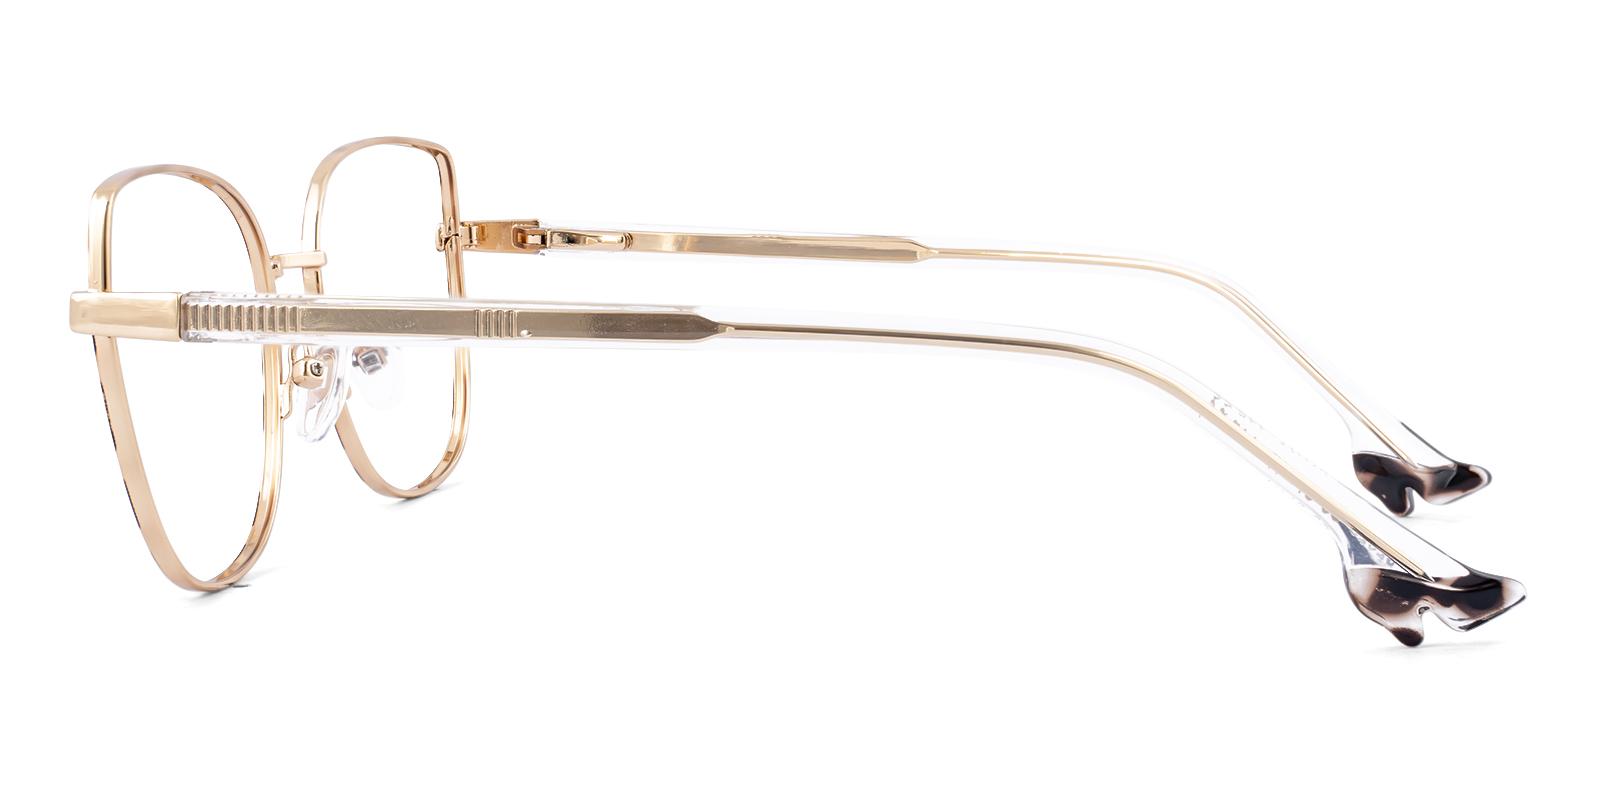 Plenilune Gold Metal Eyeglasses , SpringHinges , NosePads Frames from ABBE Glasses